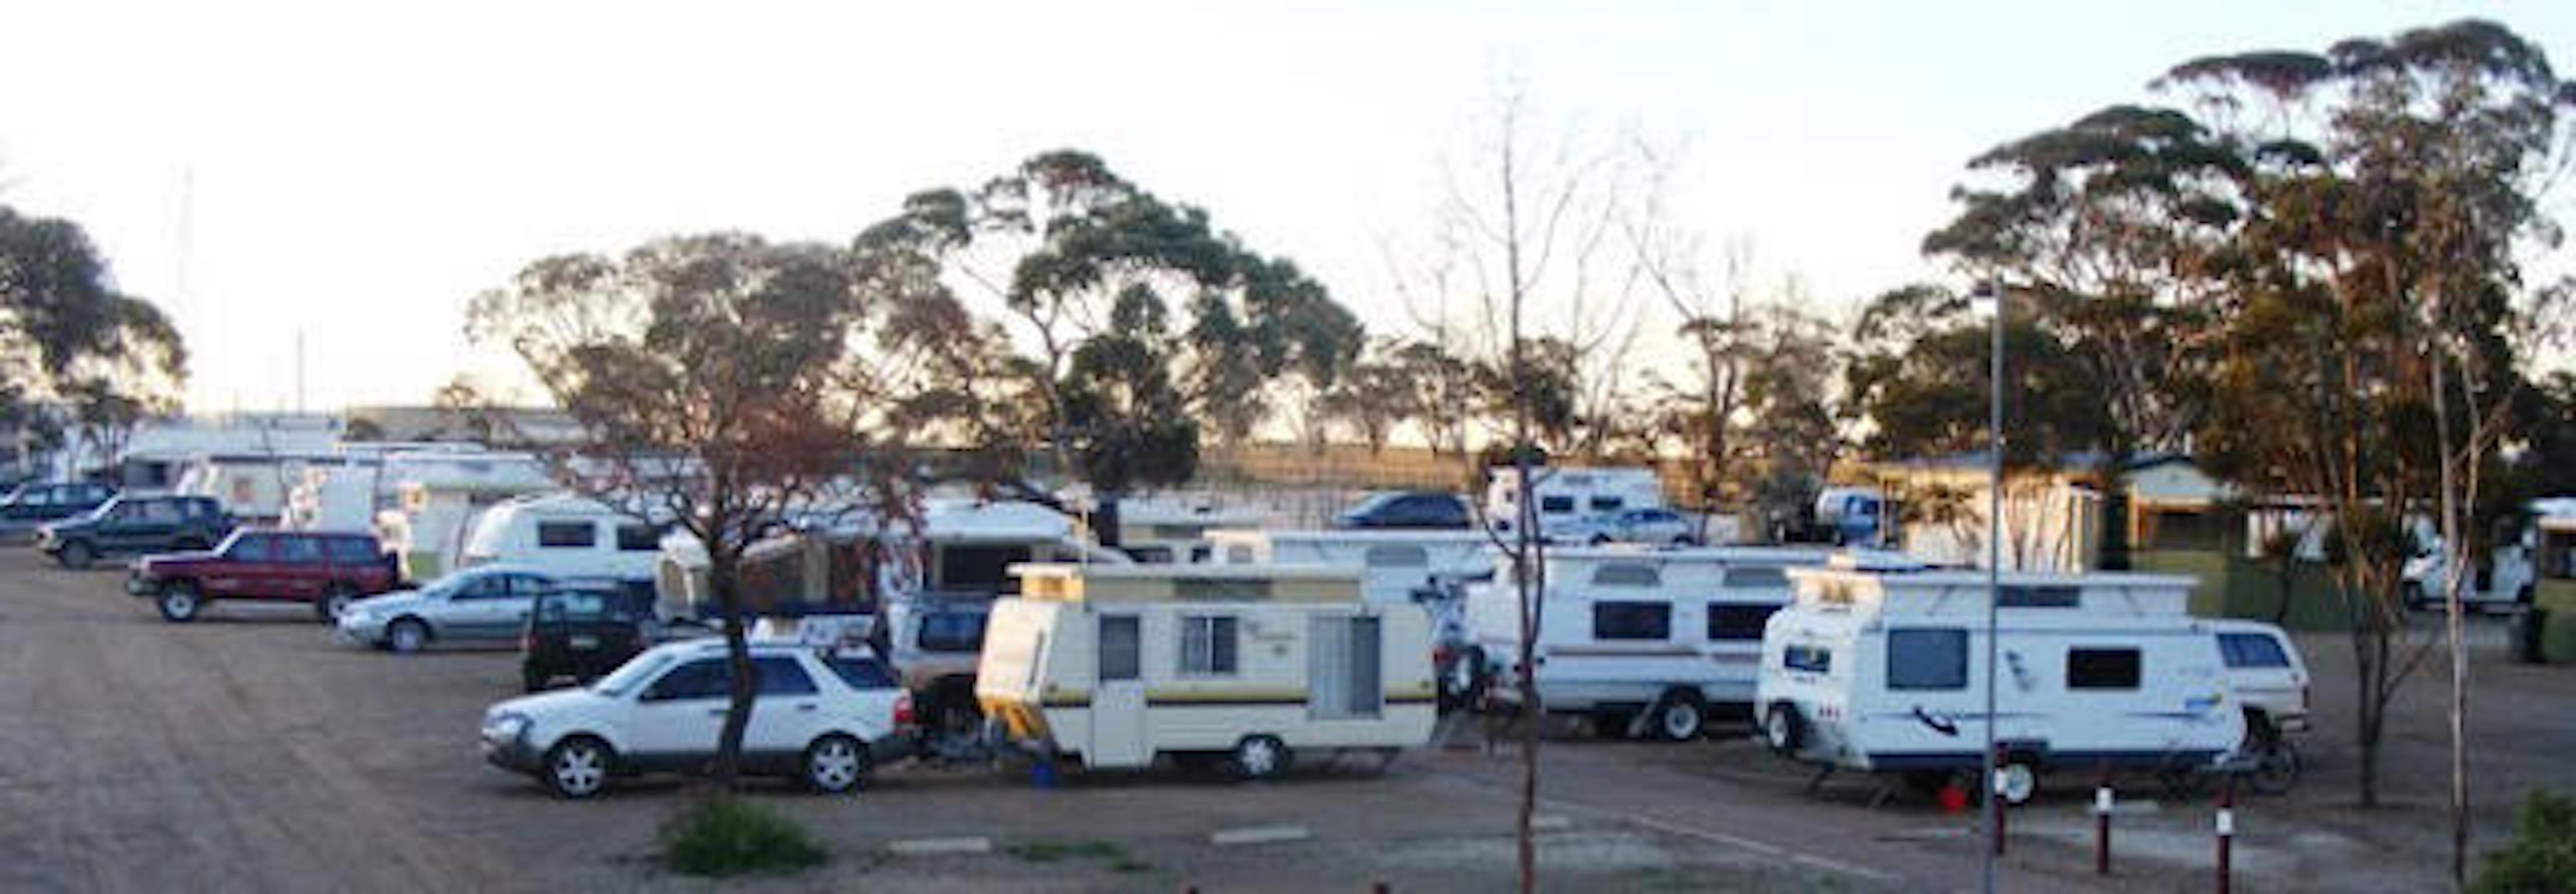 Woomera Traveller's Village and Caravan Park - Redcliffe Tourism